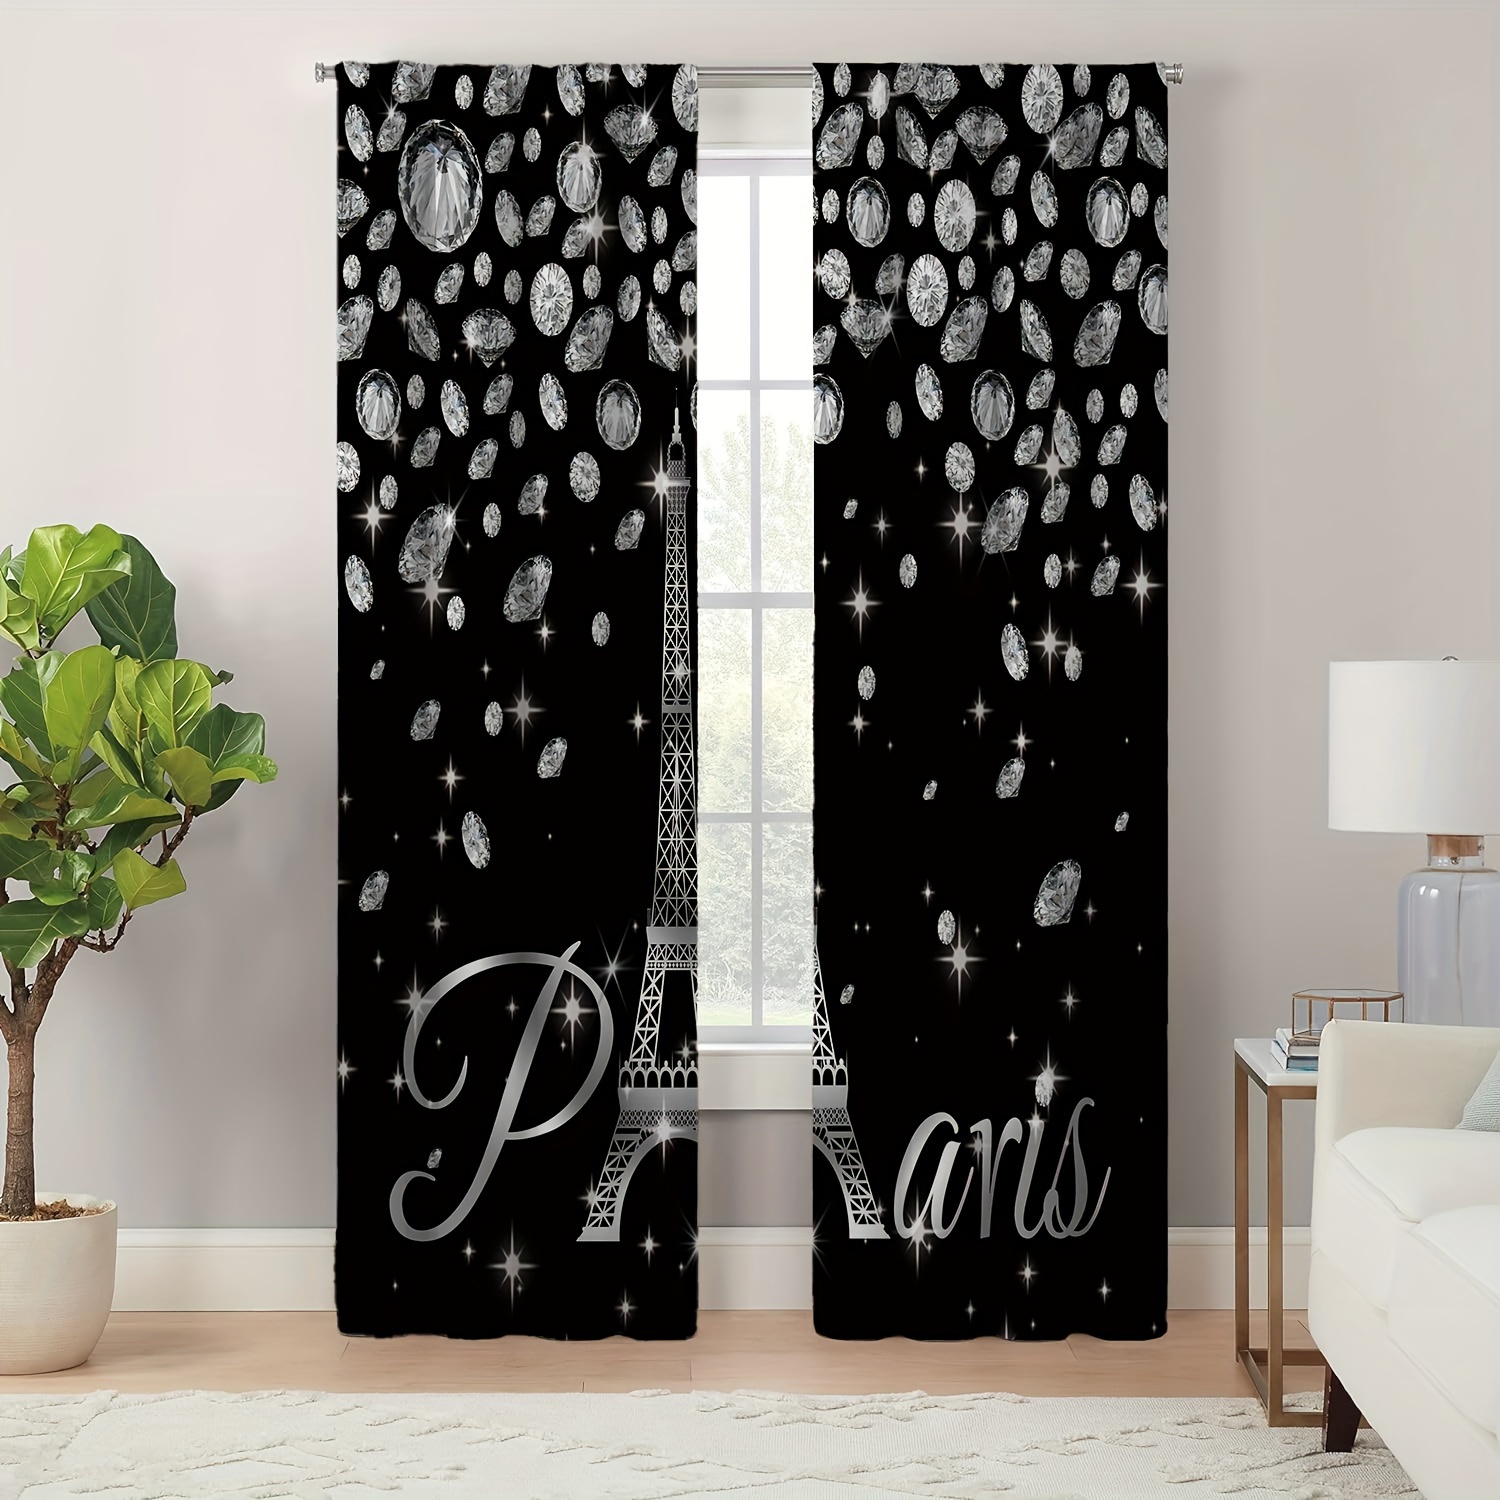 

Vintage Paris Tower Jacquard Weave Polyester Curtain Set With Tie Backs - Machine Washable Doorway Drapes For Living Room - Elegant Artsy Design, 2pcs